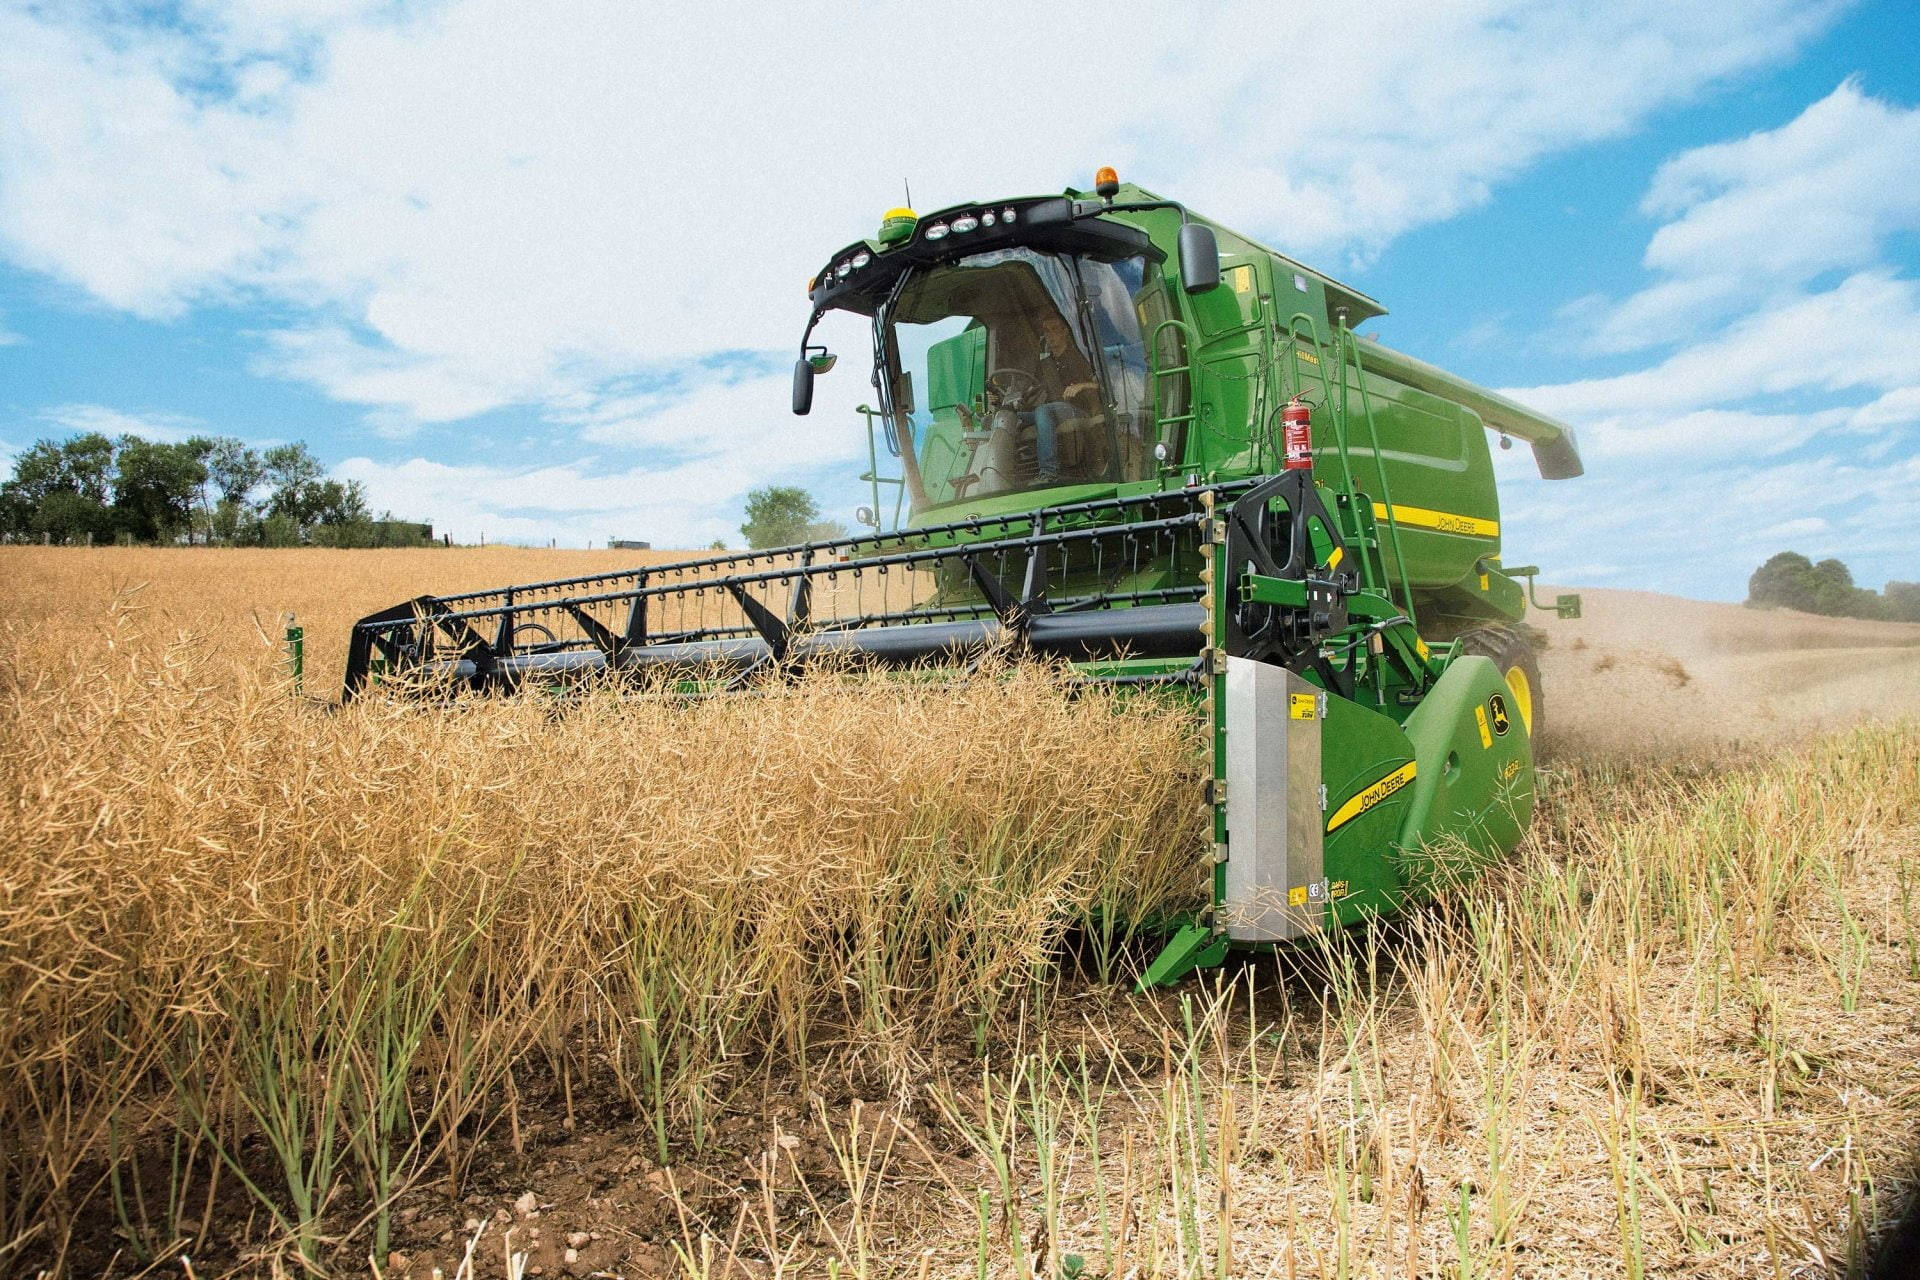 John Deere Machine Harvesting Wheat Field Background